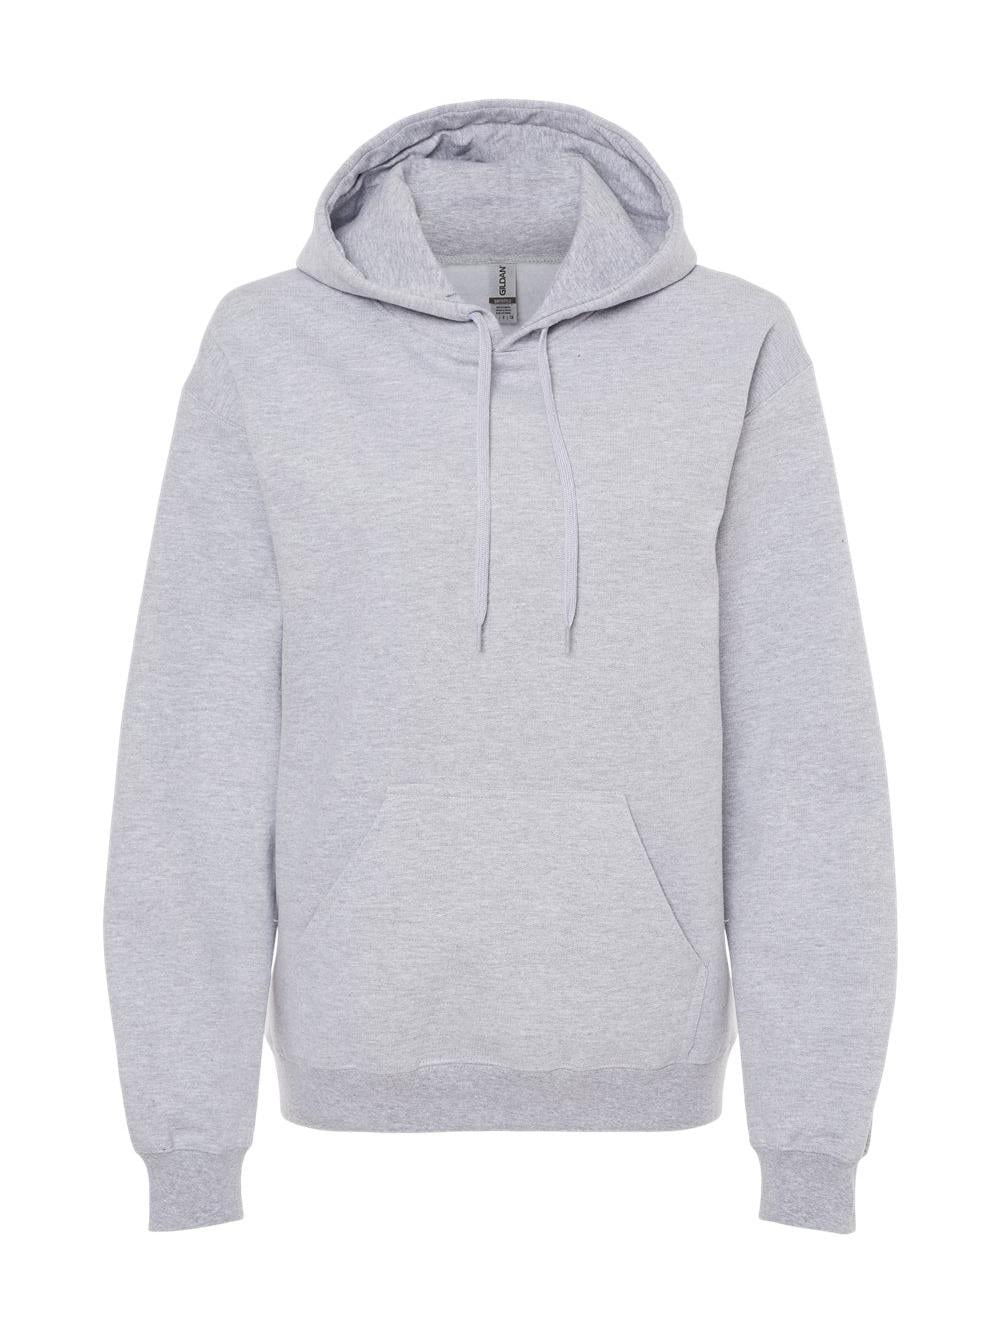 Gildan - Softstyle Hooded Sweatshirt - SF500 - Sport Grey - Size: XL ...